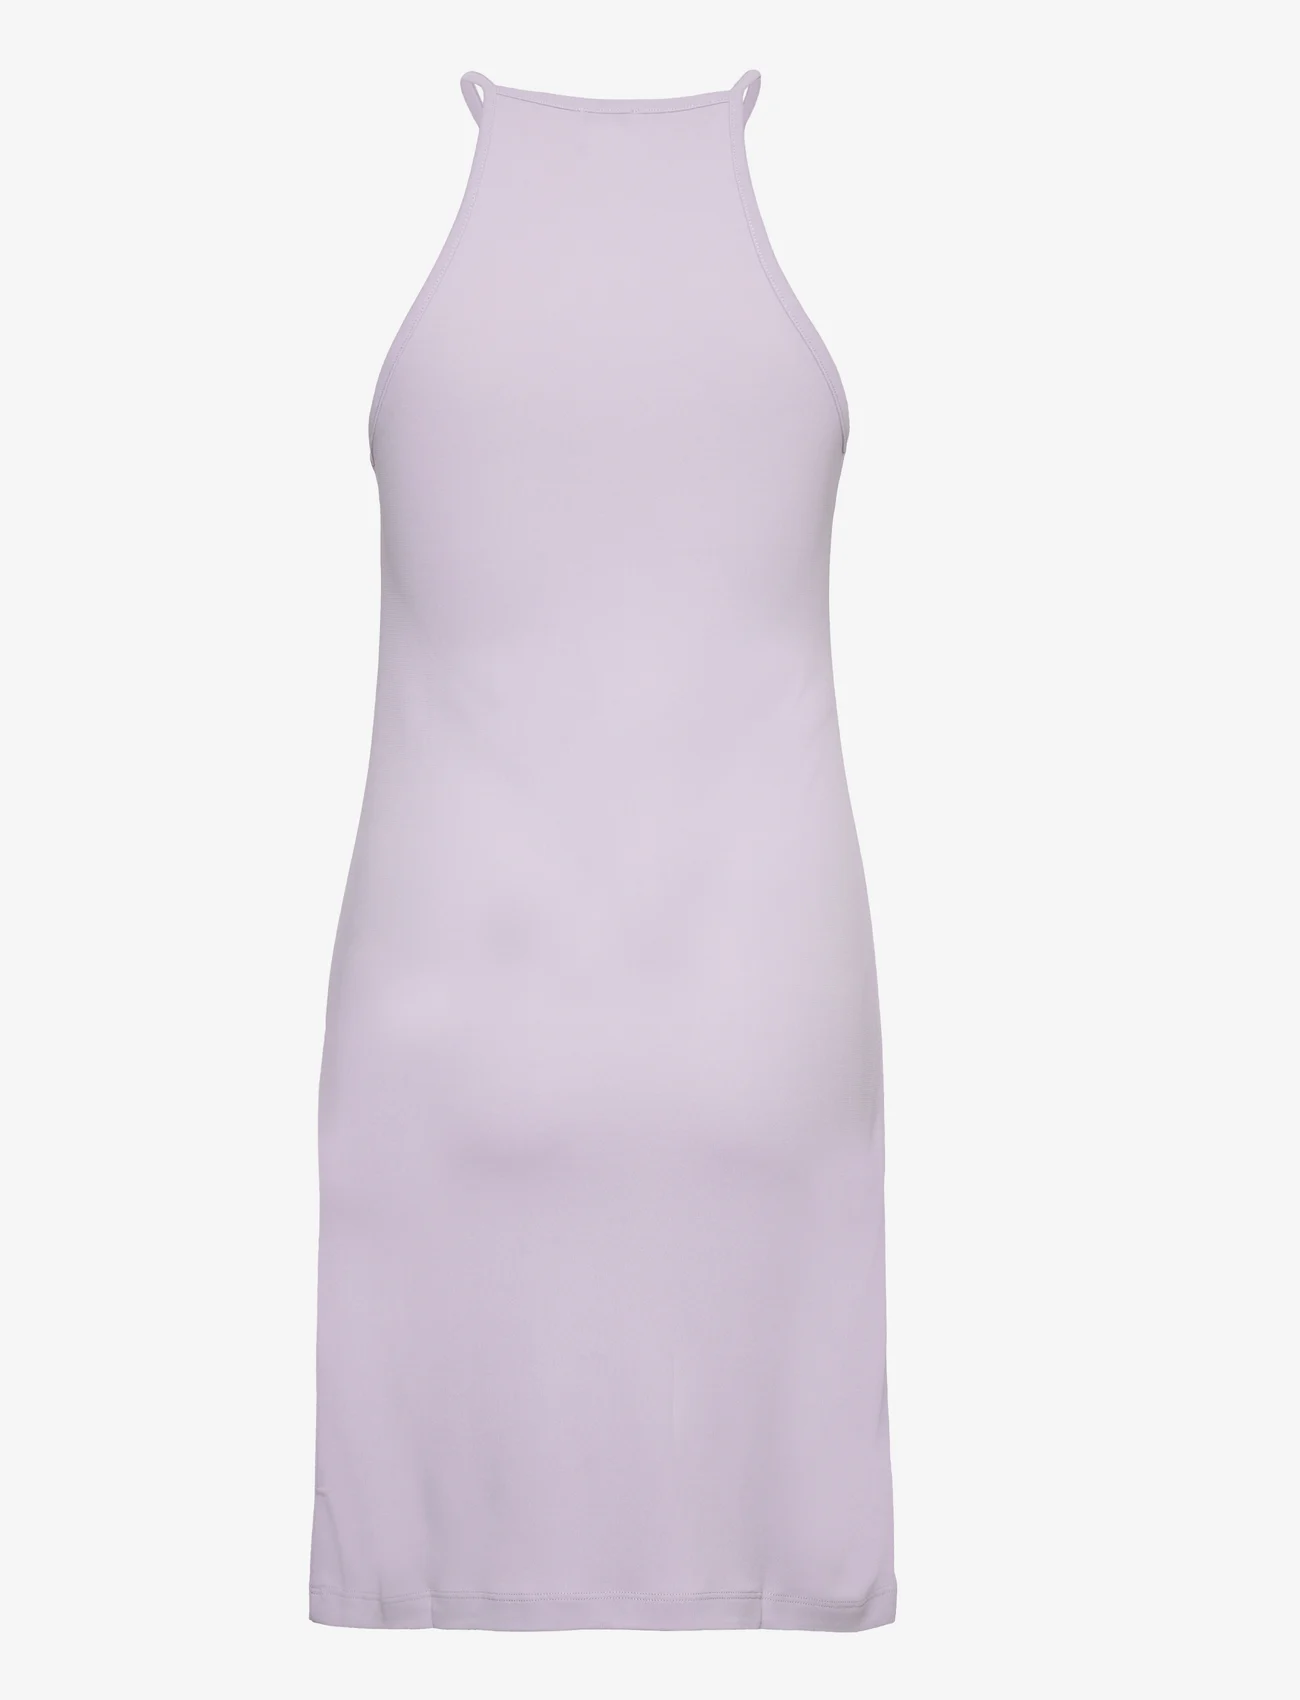 Filippa K - Strap Jersey Dress - etuikleider - pastel lil - 1